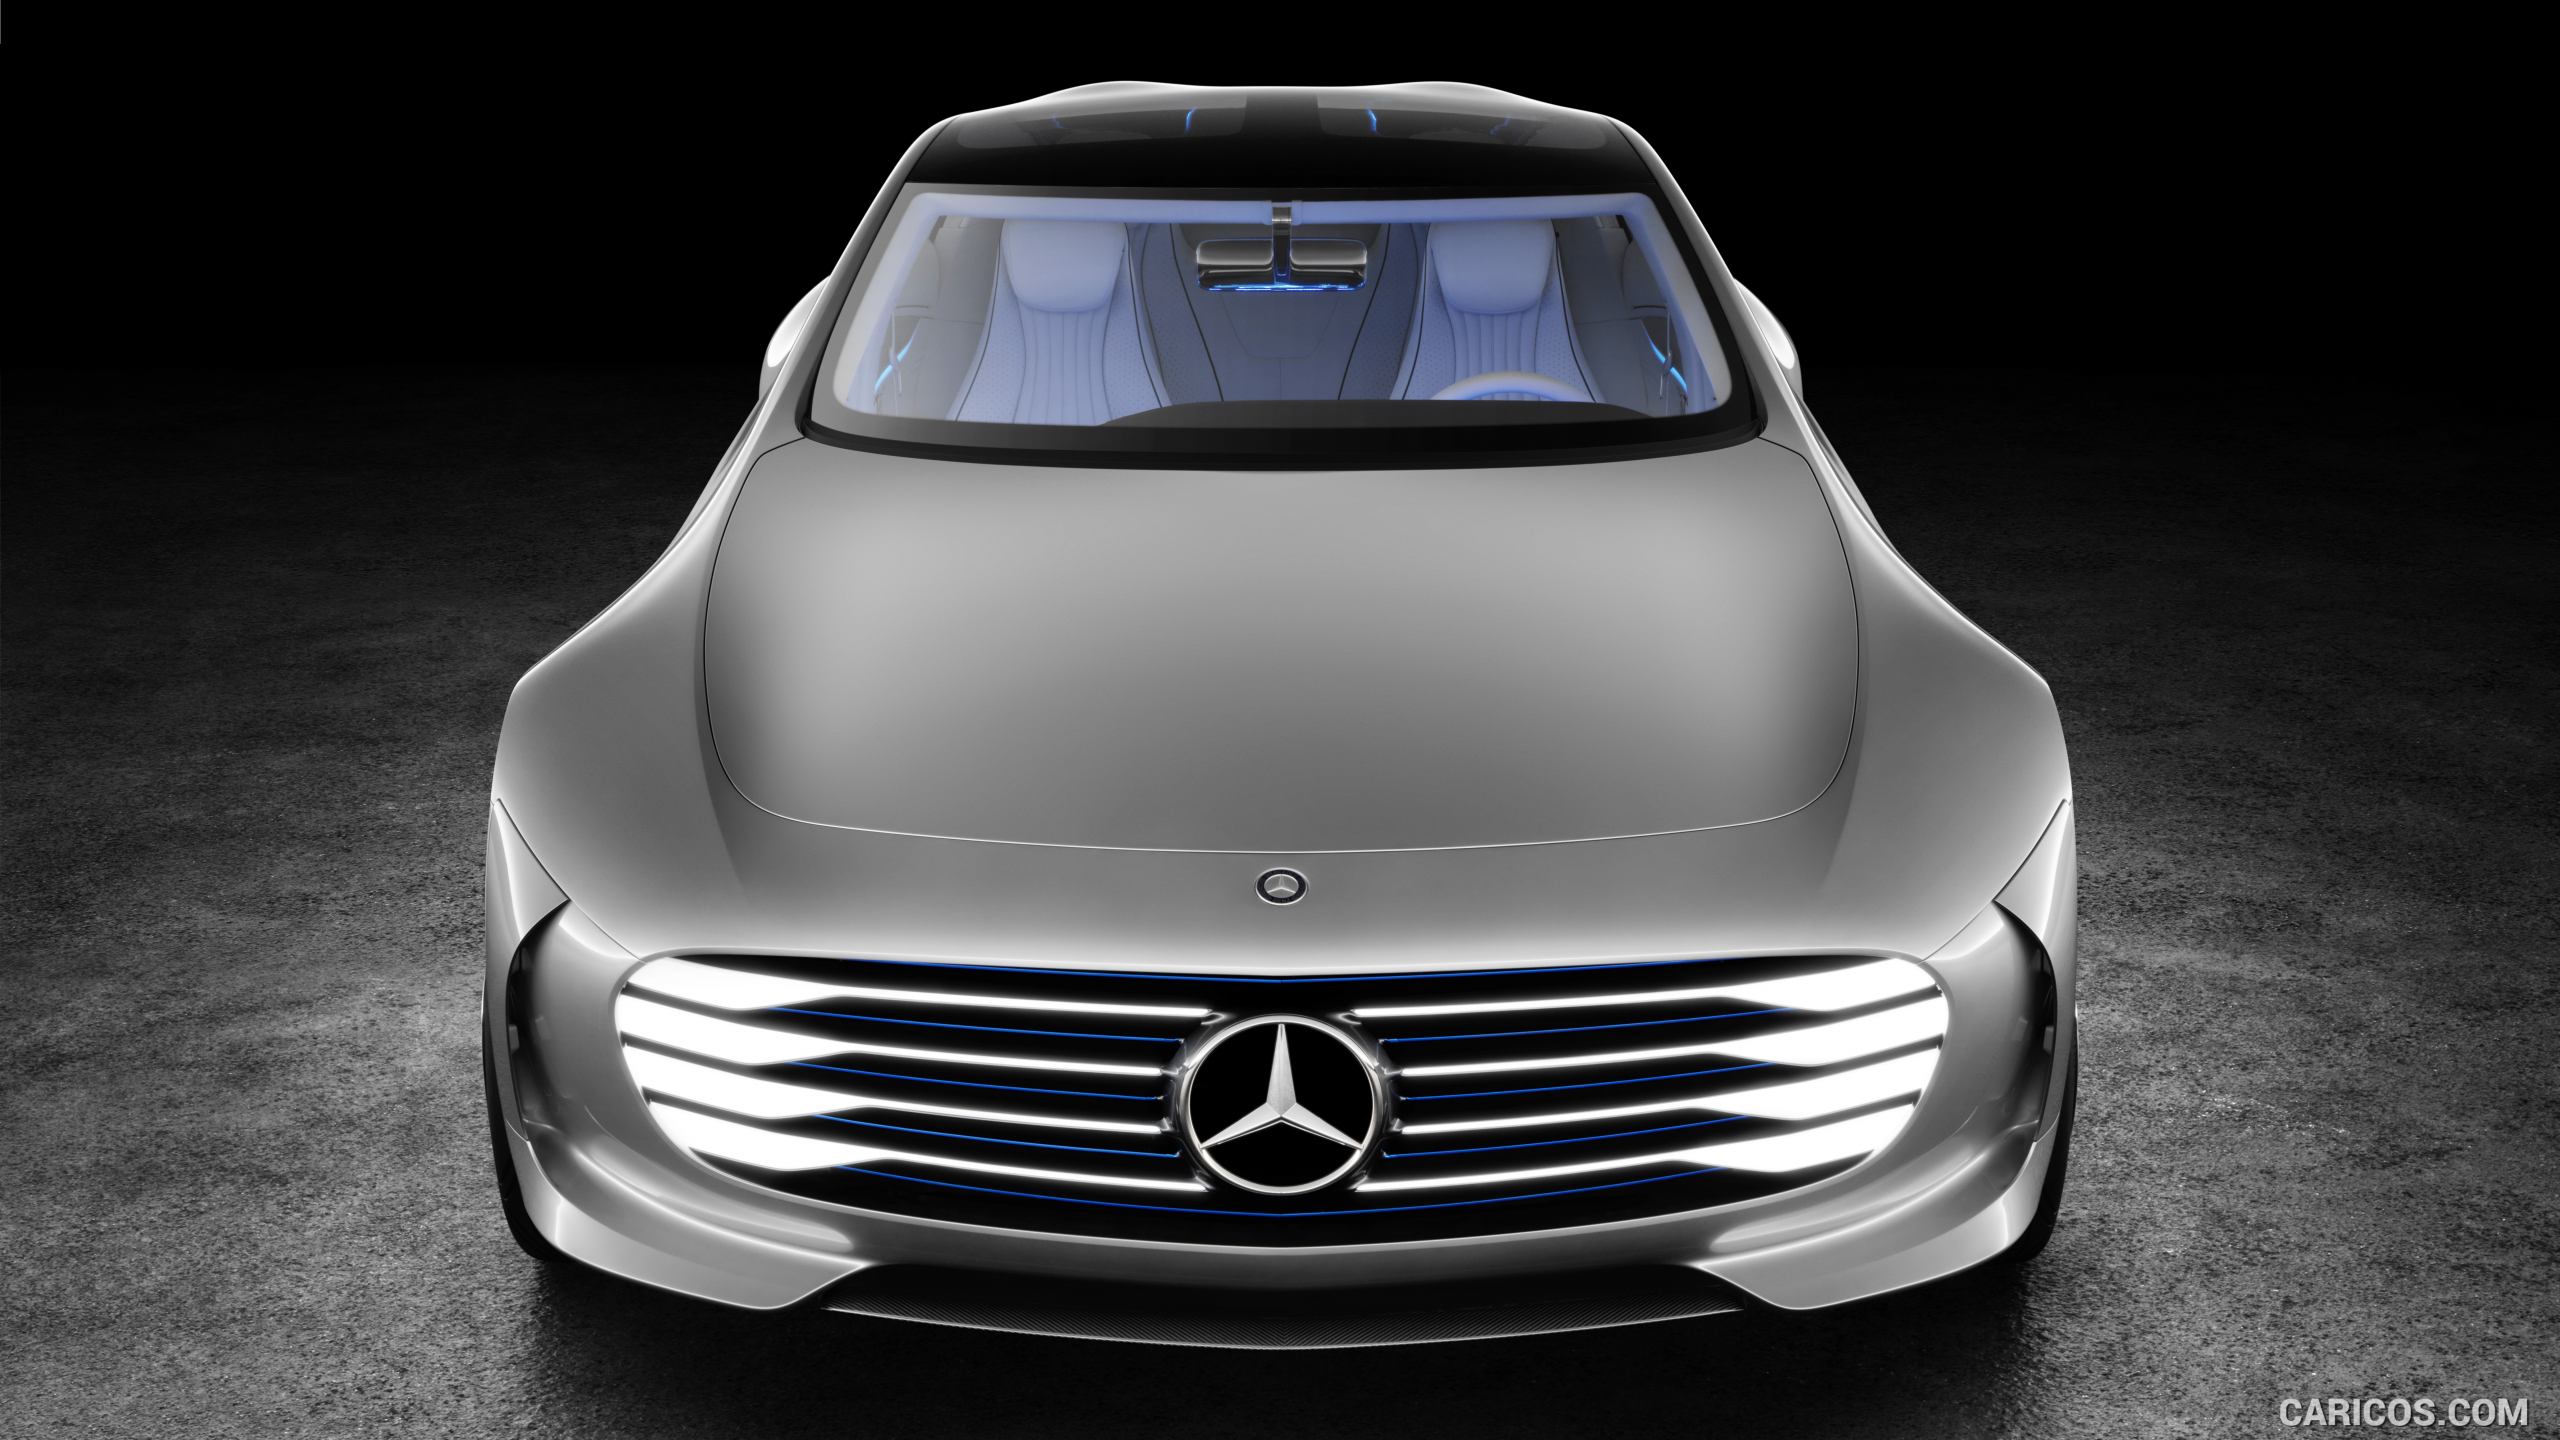 2015 Mercedes-Benz Concept IAA (Intelligent Aerodynamic Automobile)  - Front, #14 of 49